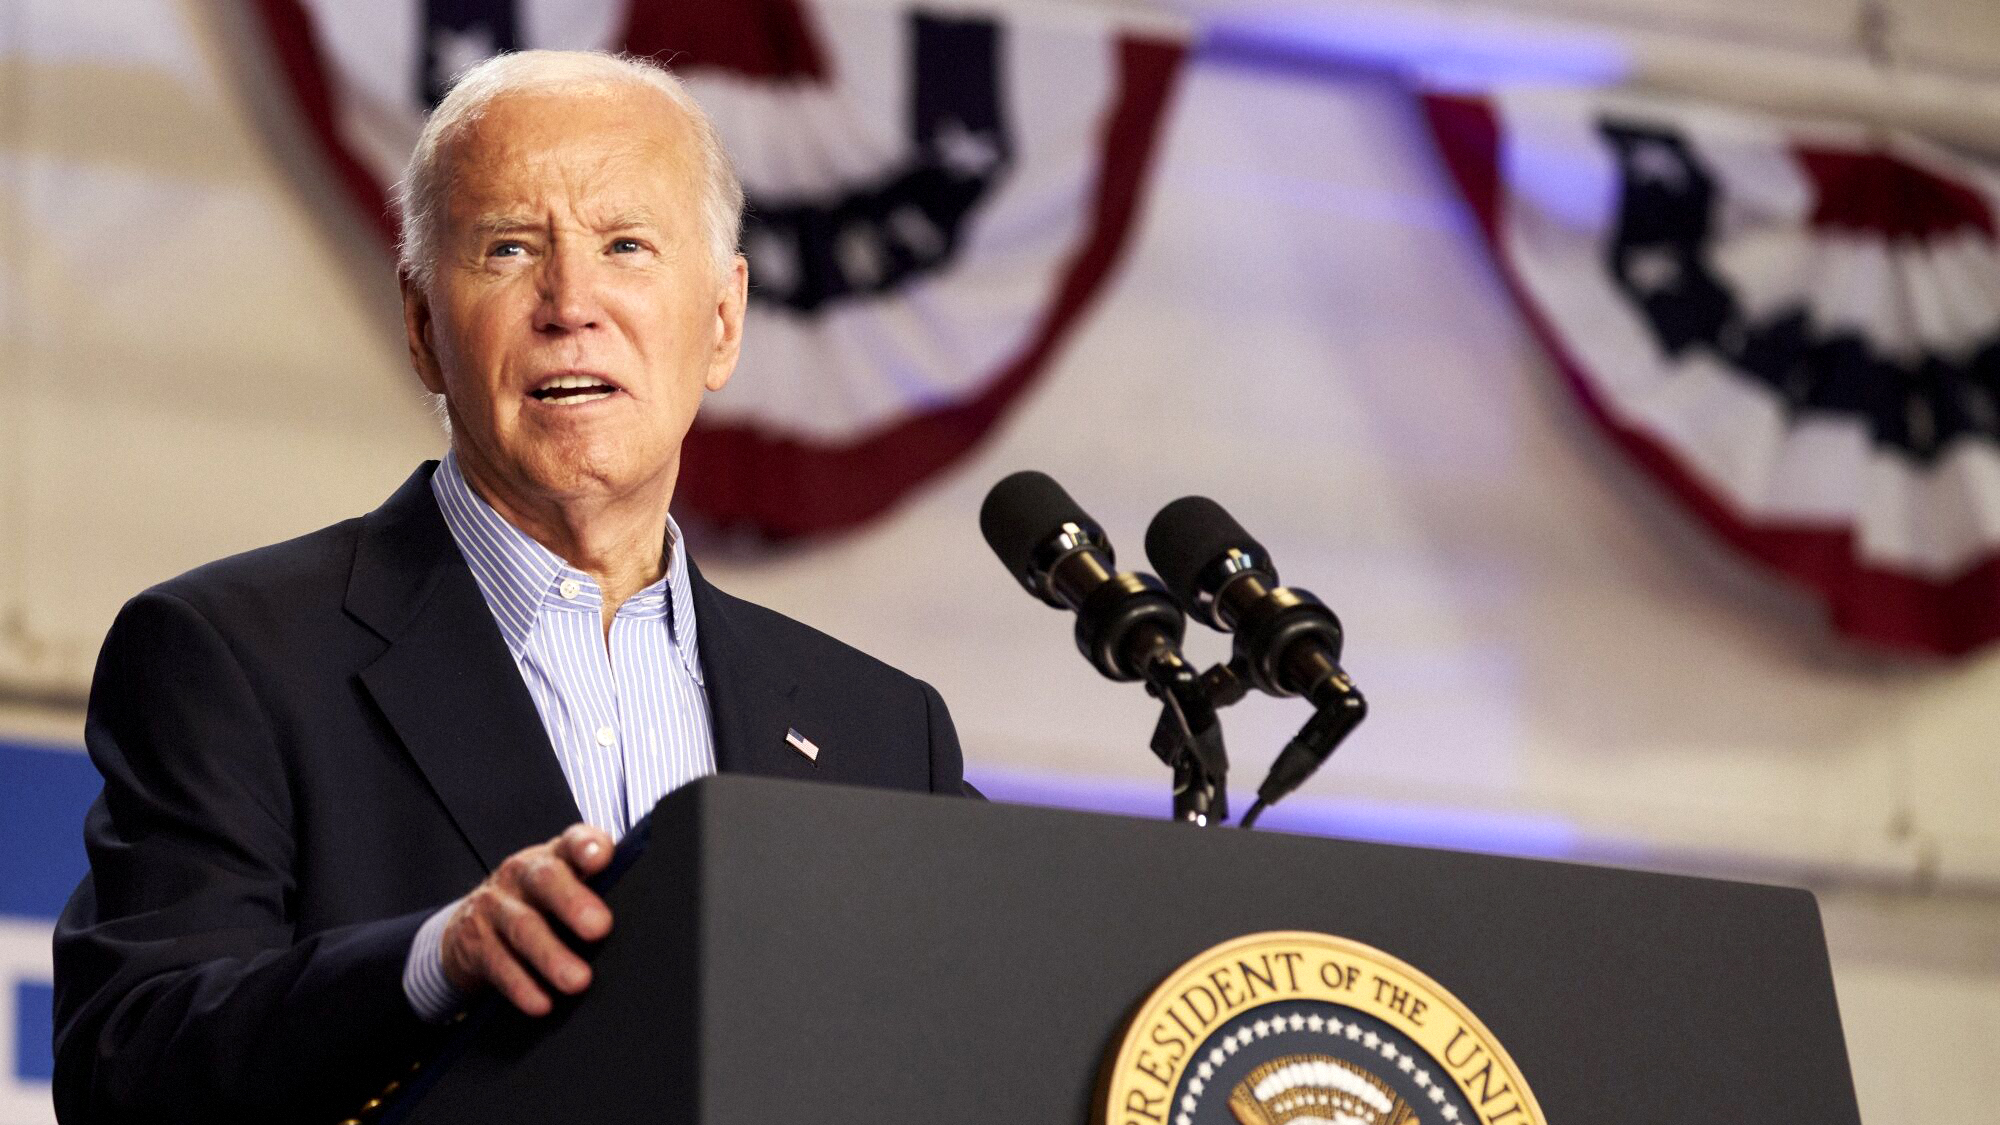  Biden on campaign trail as Democratic concern grows 